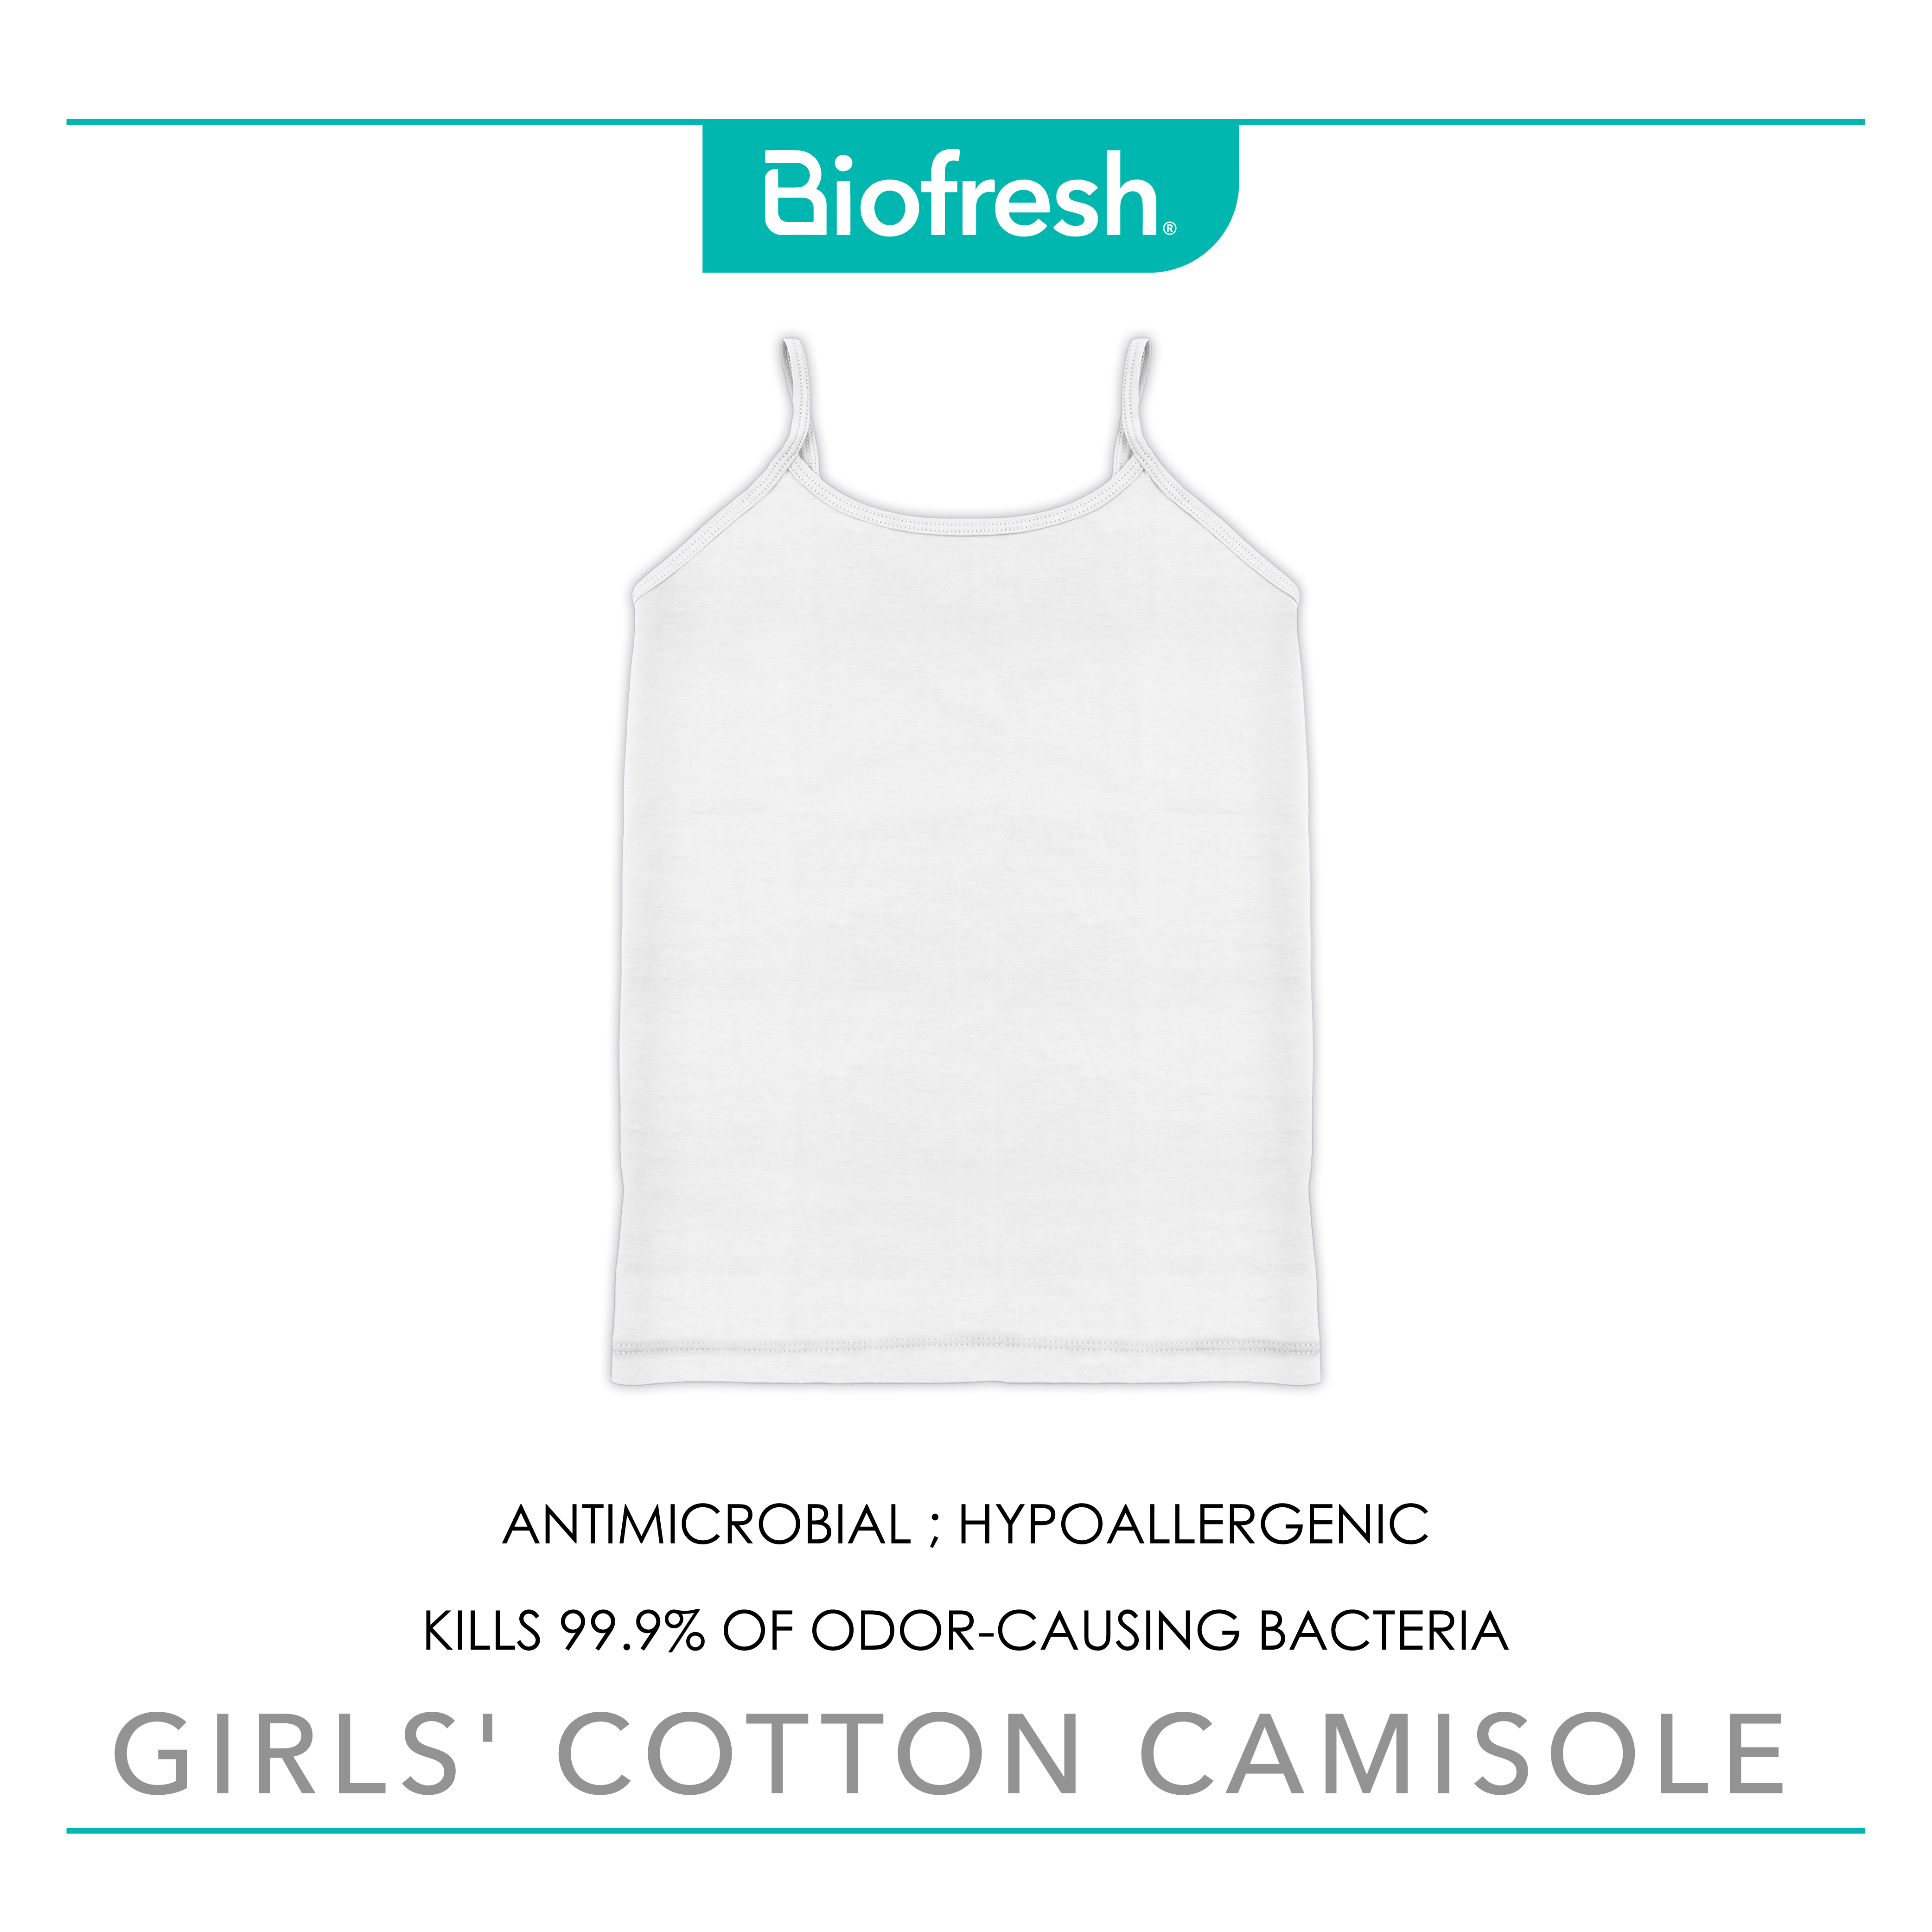 Biofresh Men's Antimicrobial Cotton Premium Slim Fit Roundneck